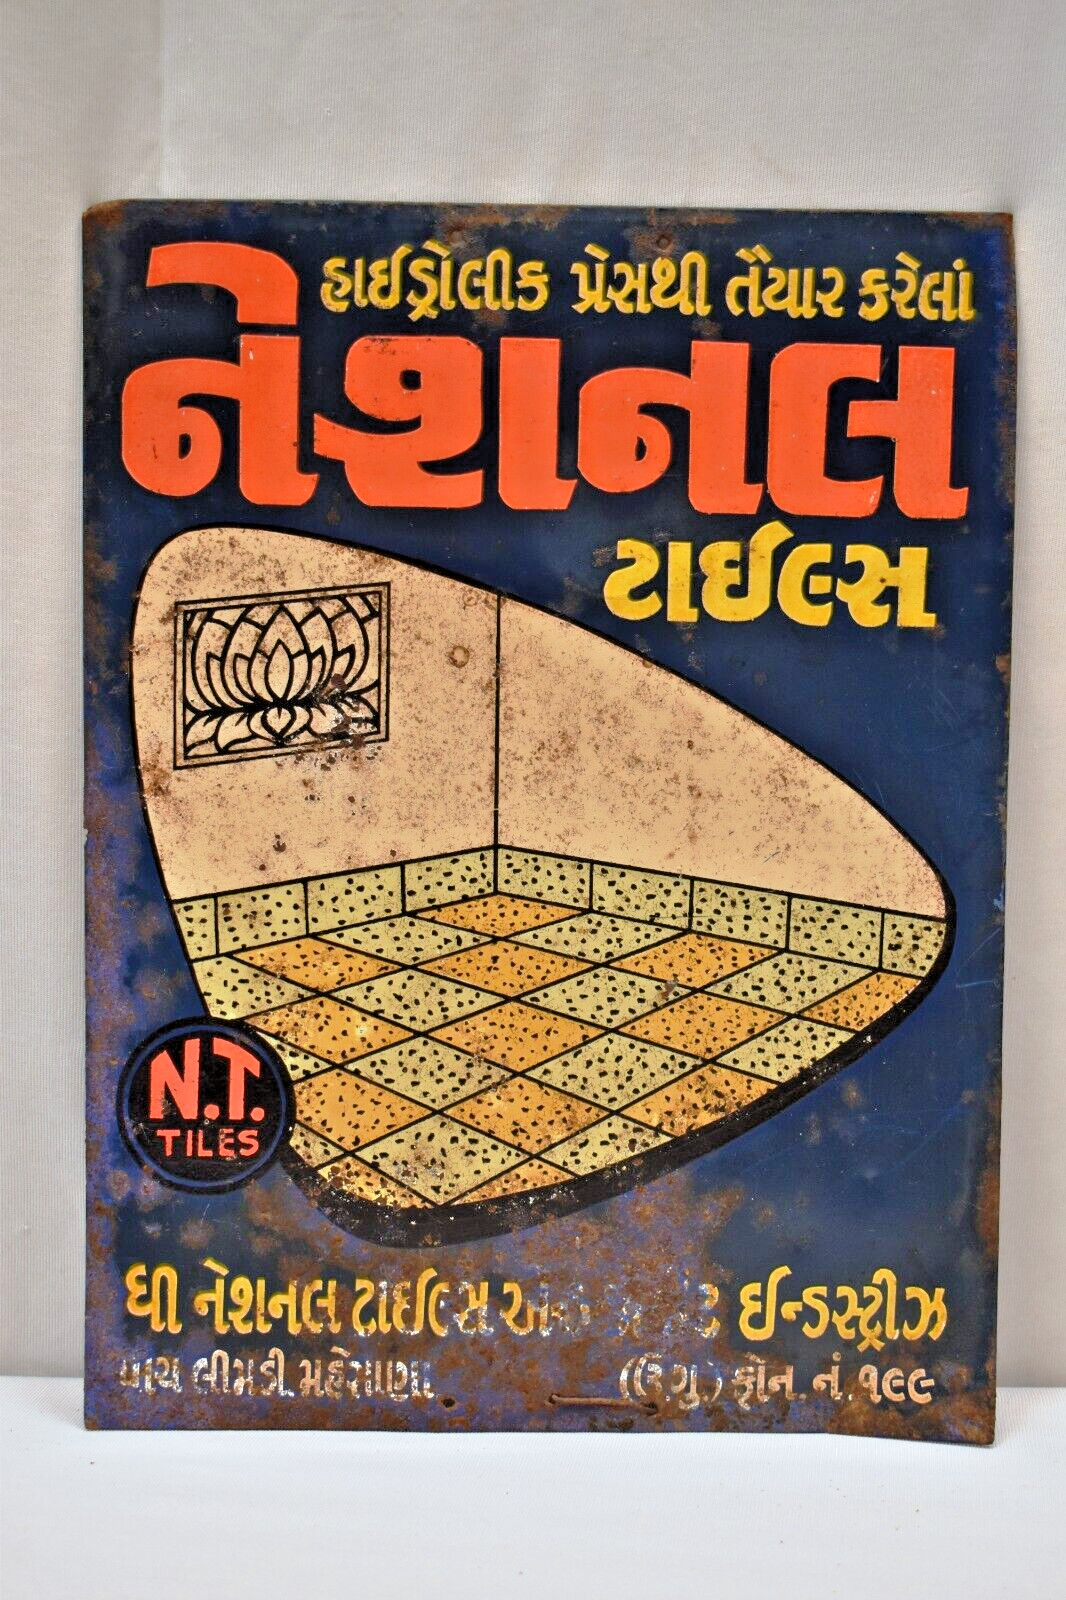 Vintage Advertising Tin Sign Board Of National Tiles Ceramic Depicting Room Rare